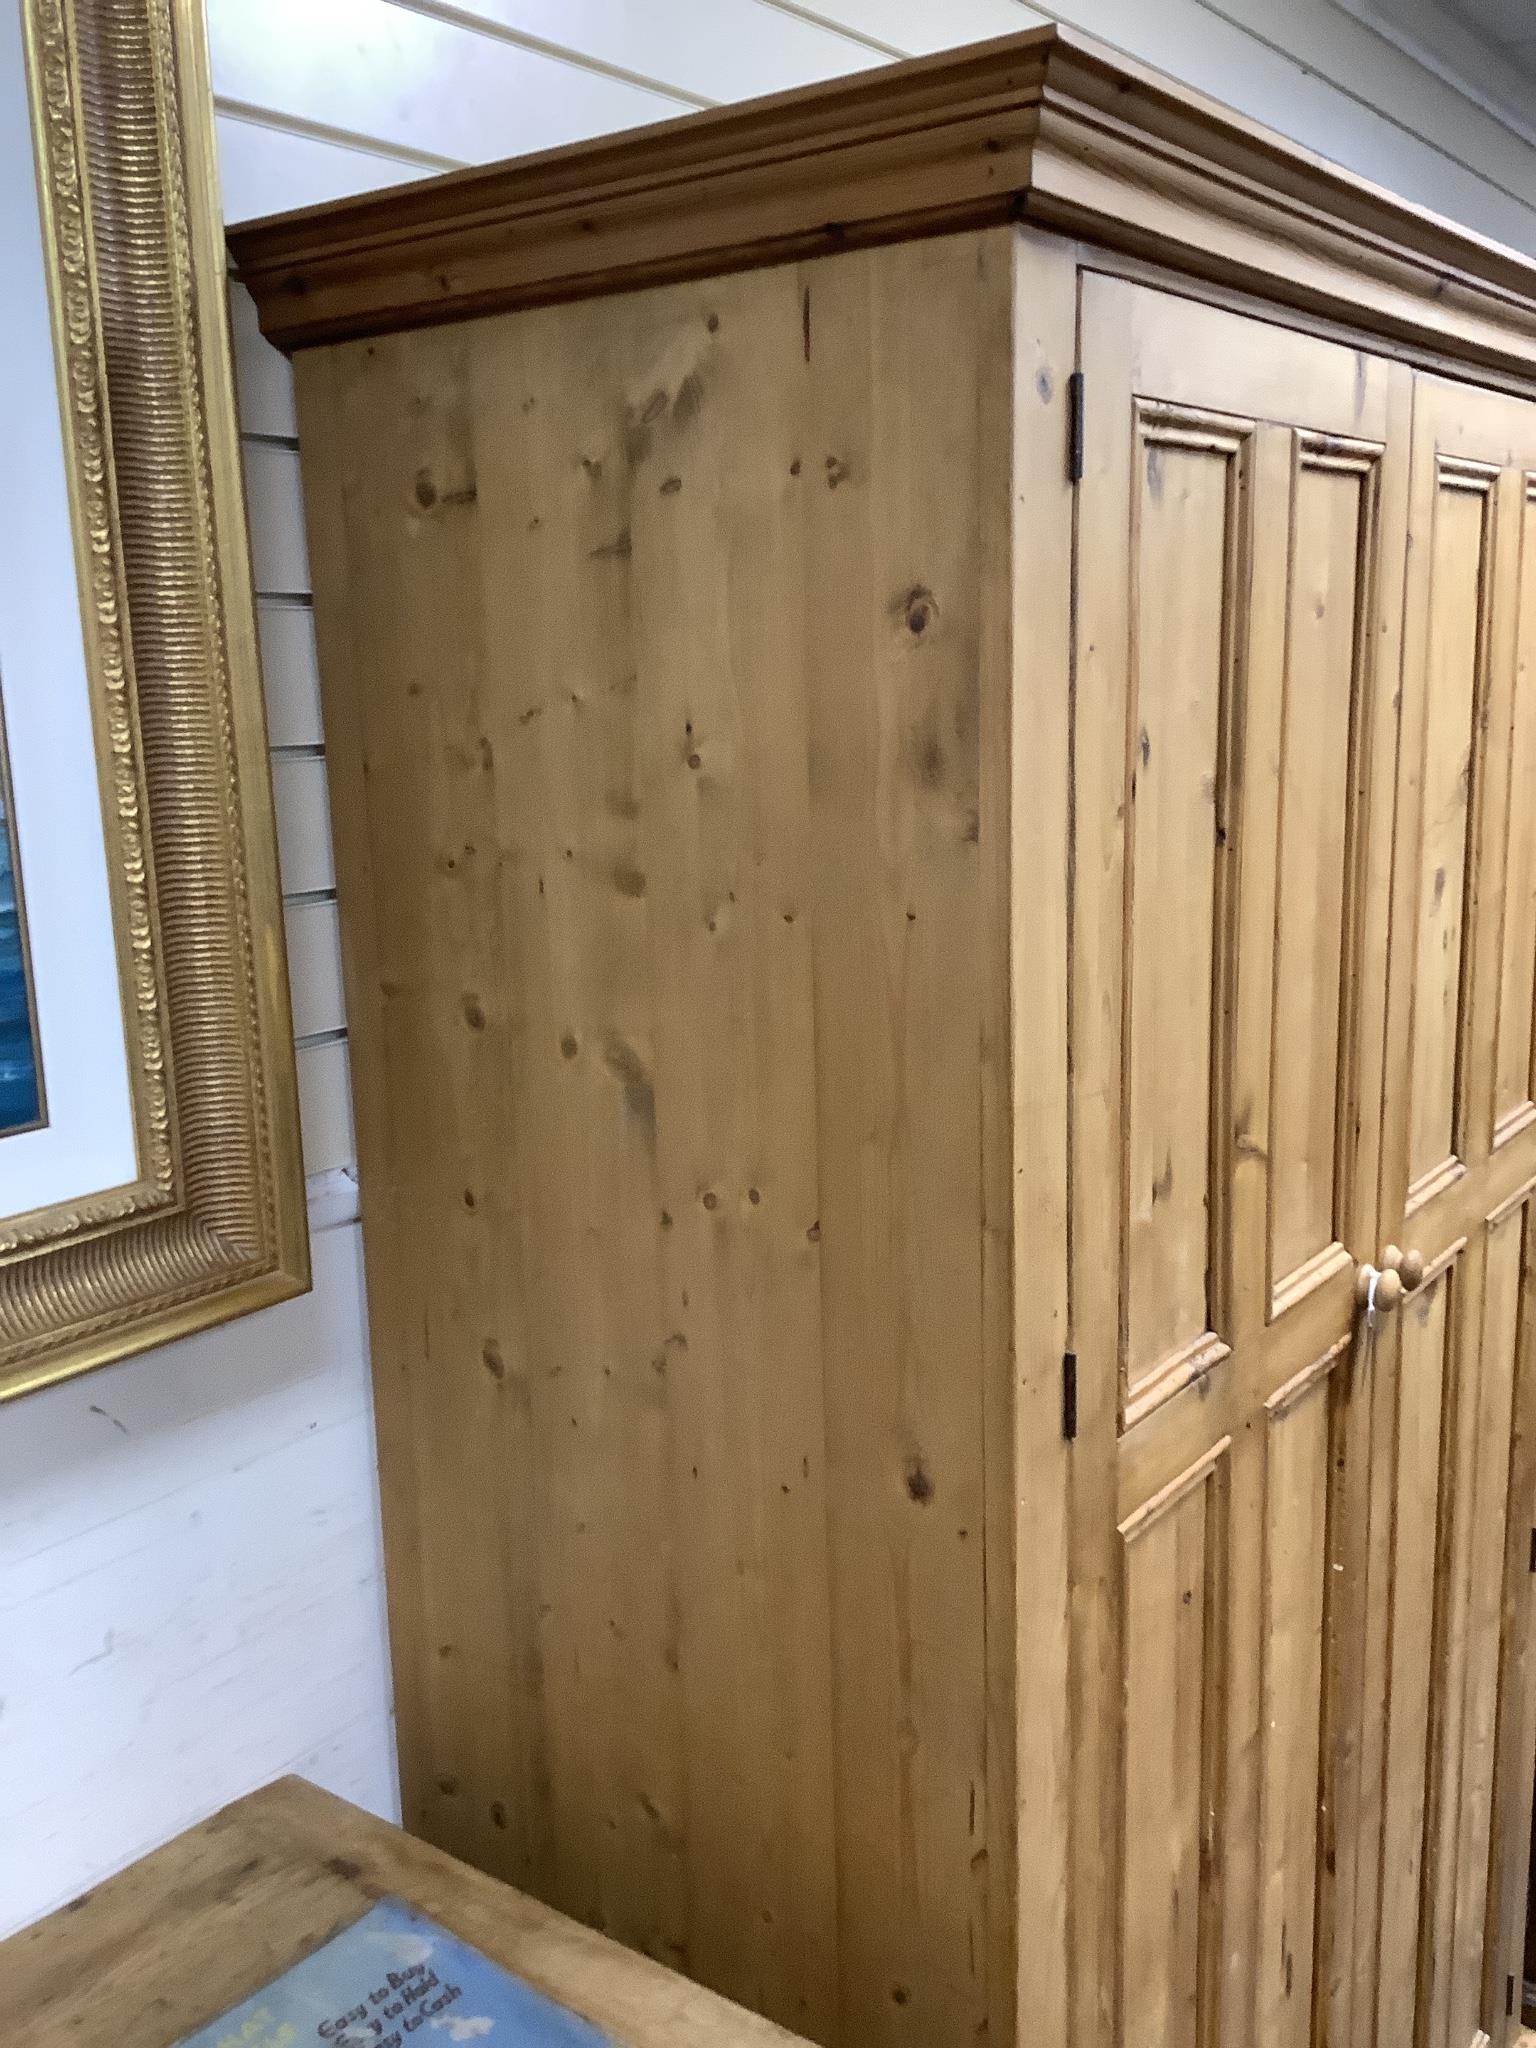 A panelled pine two door wardrobe, length 124cm, depth 59cm, height 197cm